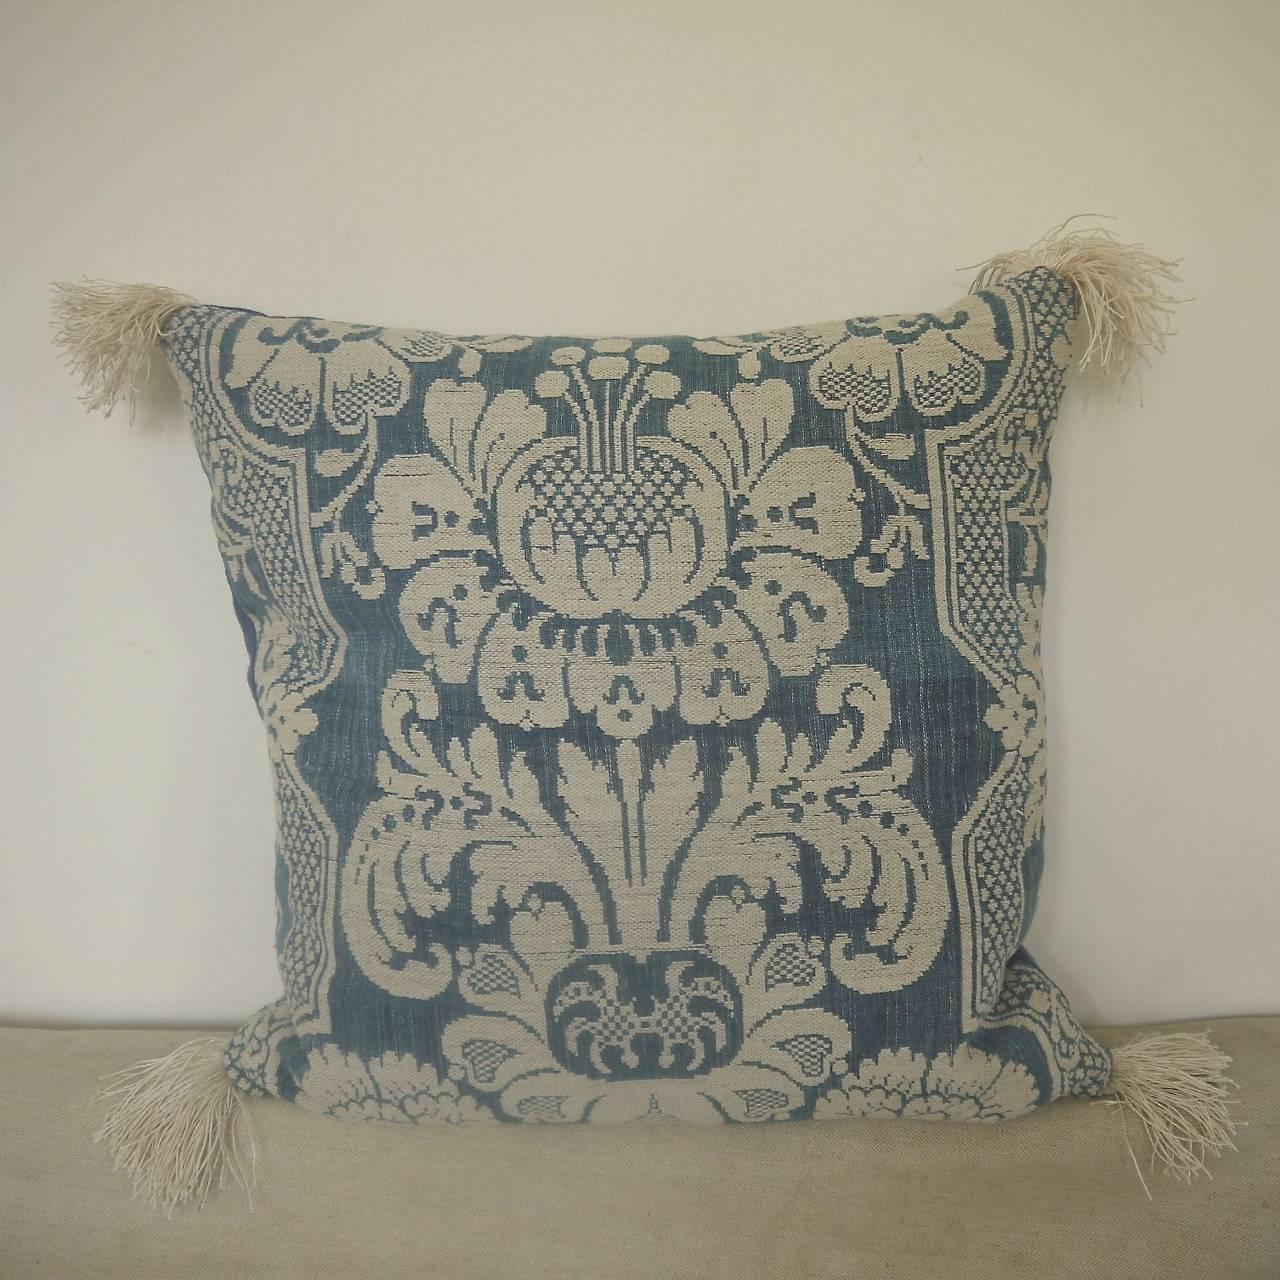 18th Century French Antique Toile d'Abbeville Woven Cotton Linen Pillow For Sale 1